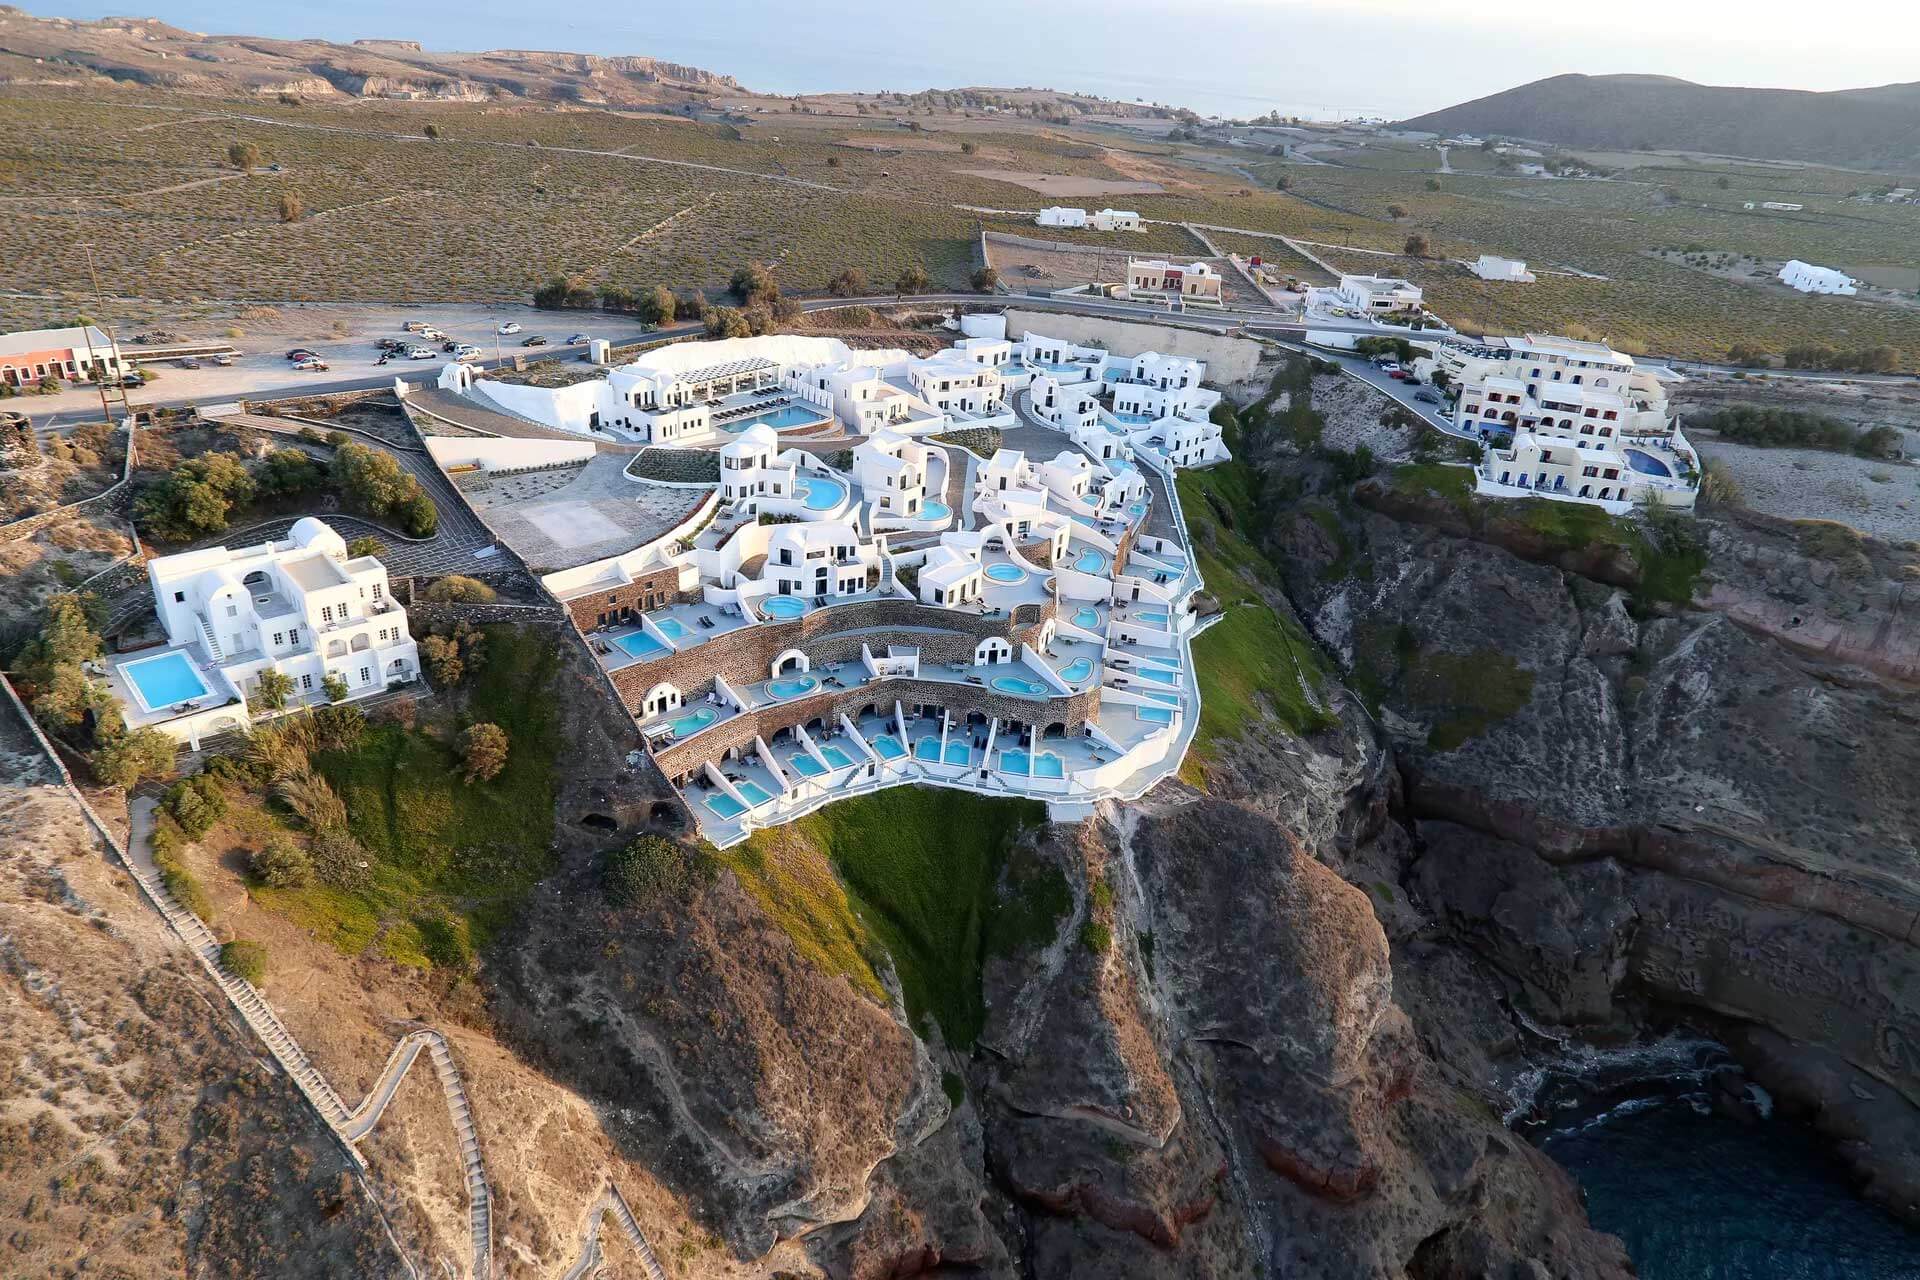 Meilleurs hôtels de luxe à Santorin 2021 - Meilleurs hôtels de luxe à Santorin 2021